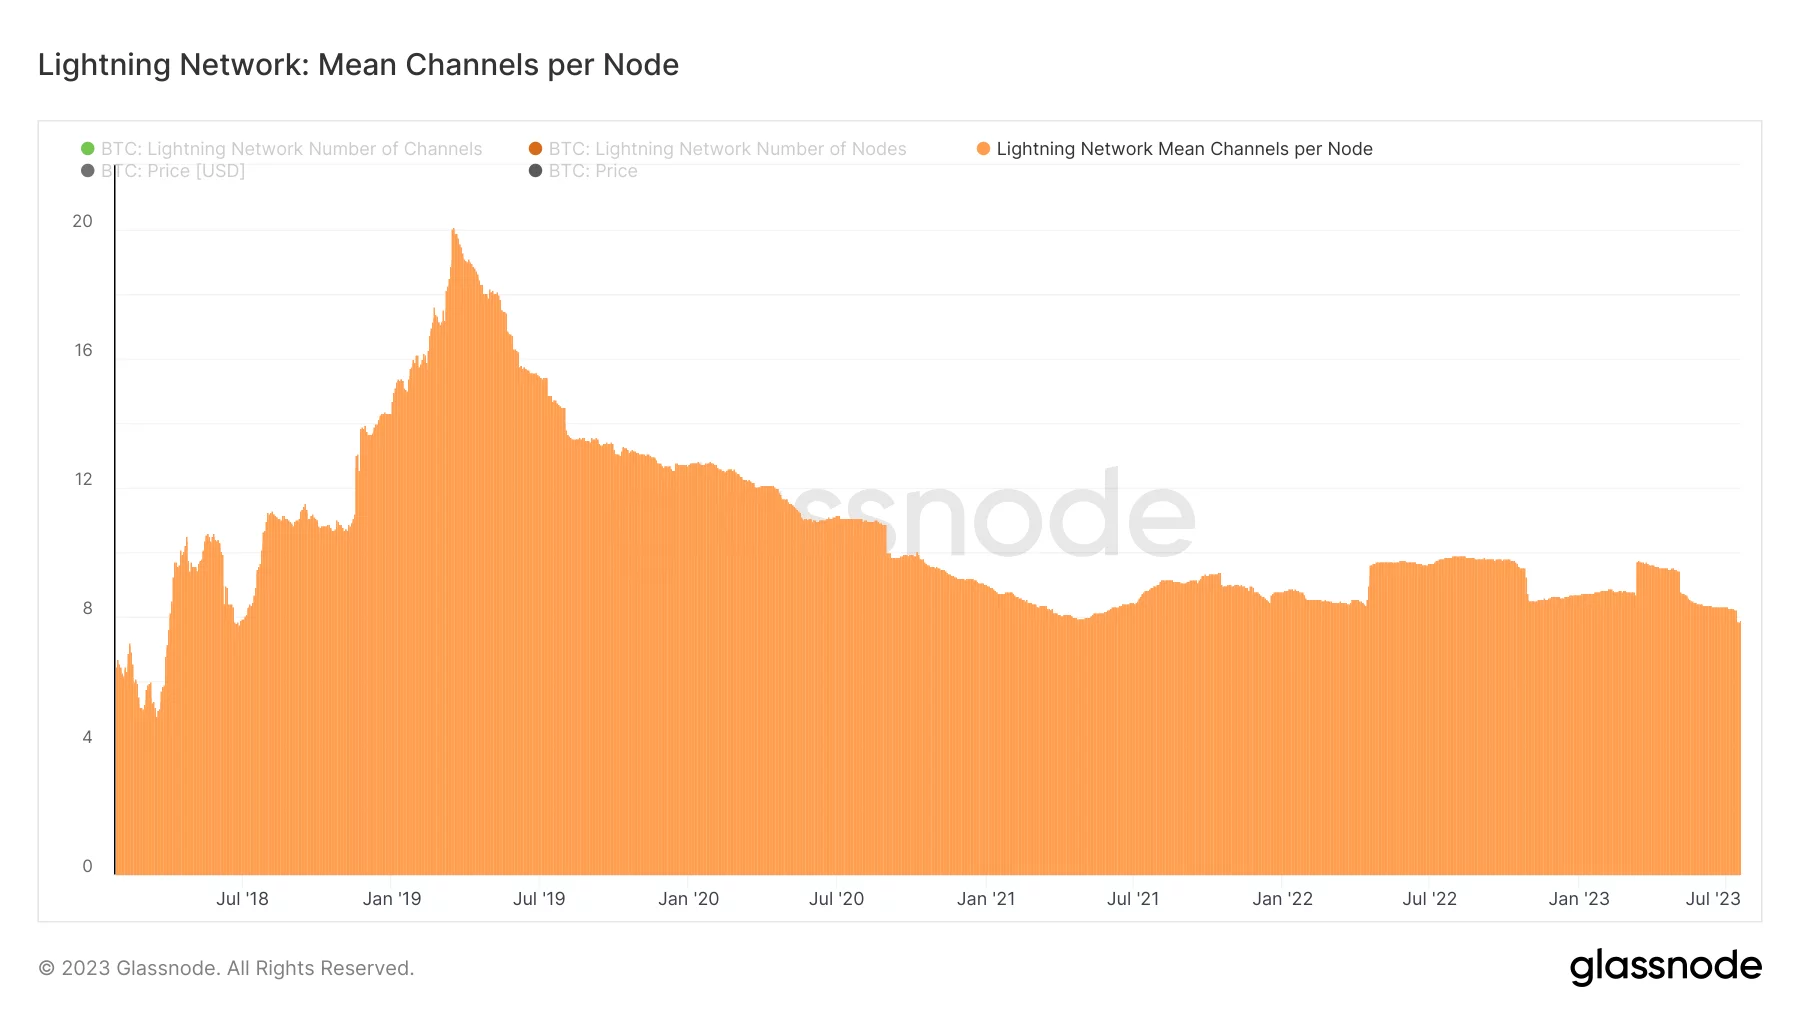 Figure 4 - Average number of channels per node on the Lightning Network